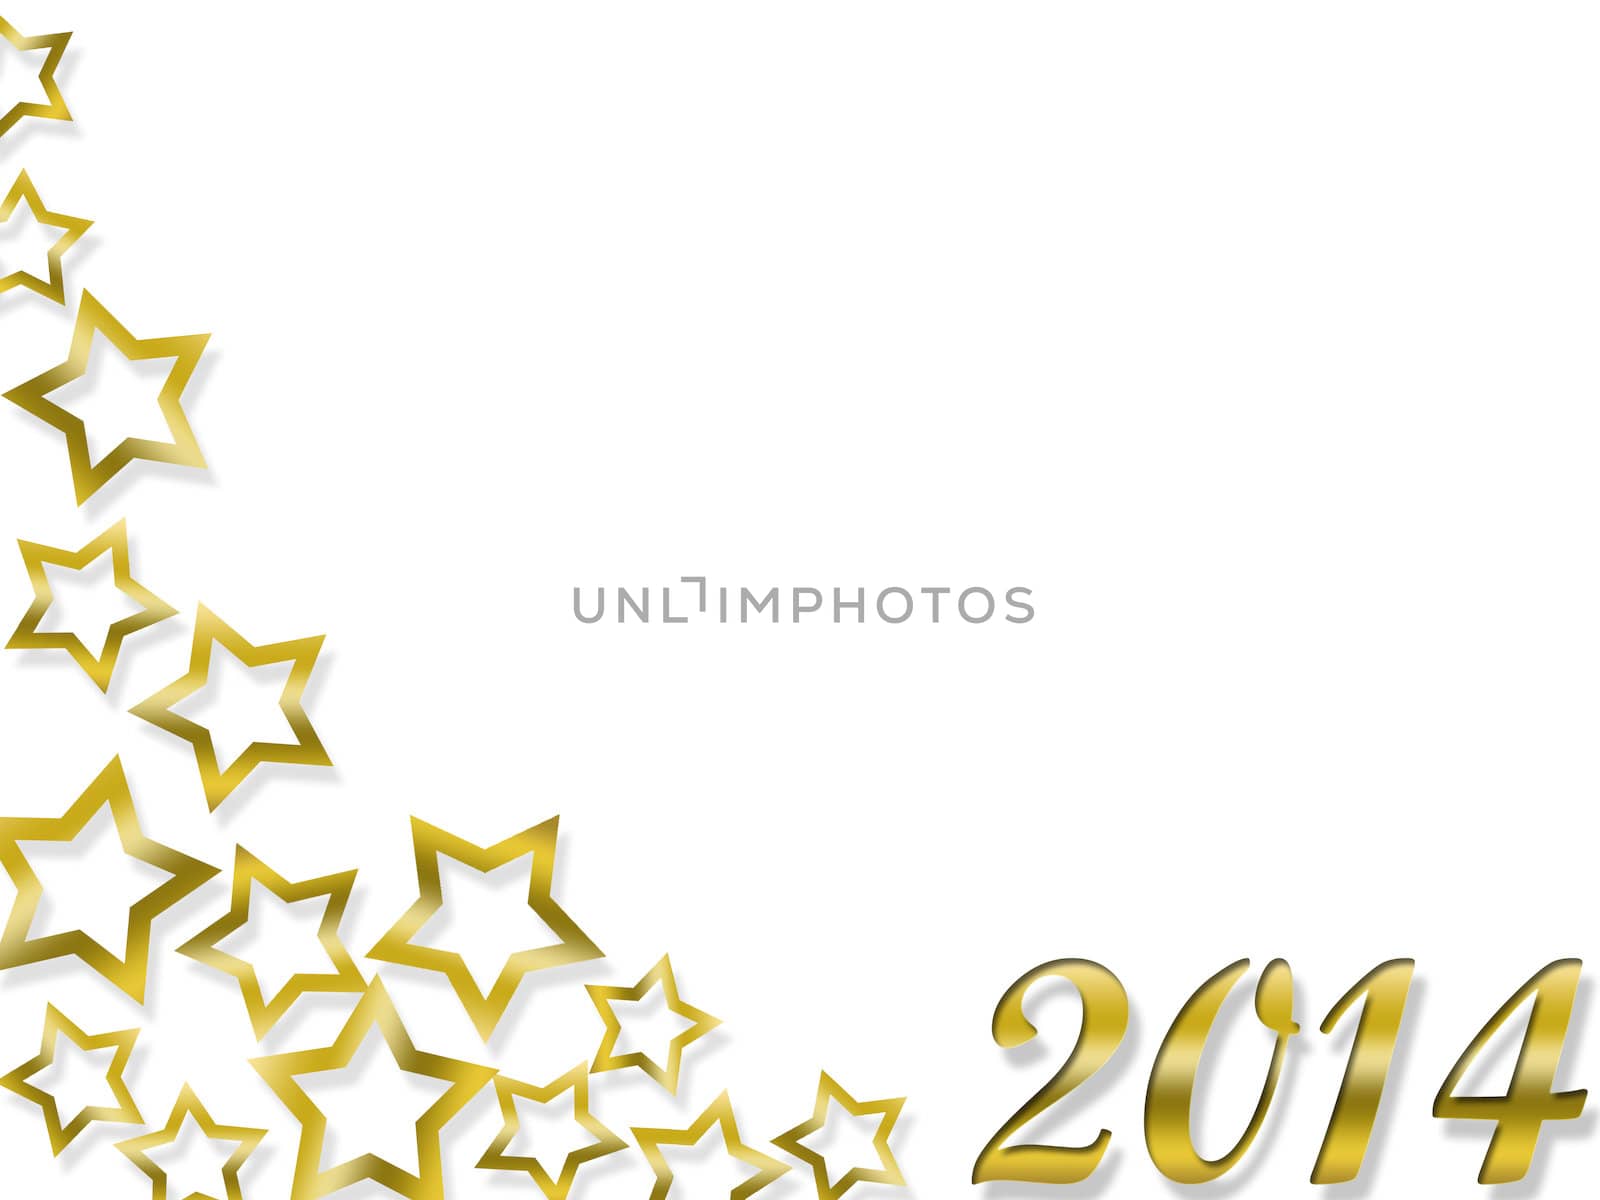 Golden stars - Happy New Year 2014 by Dddaca